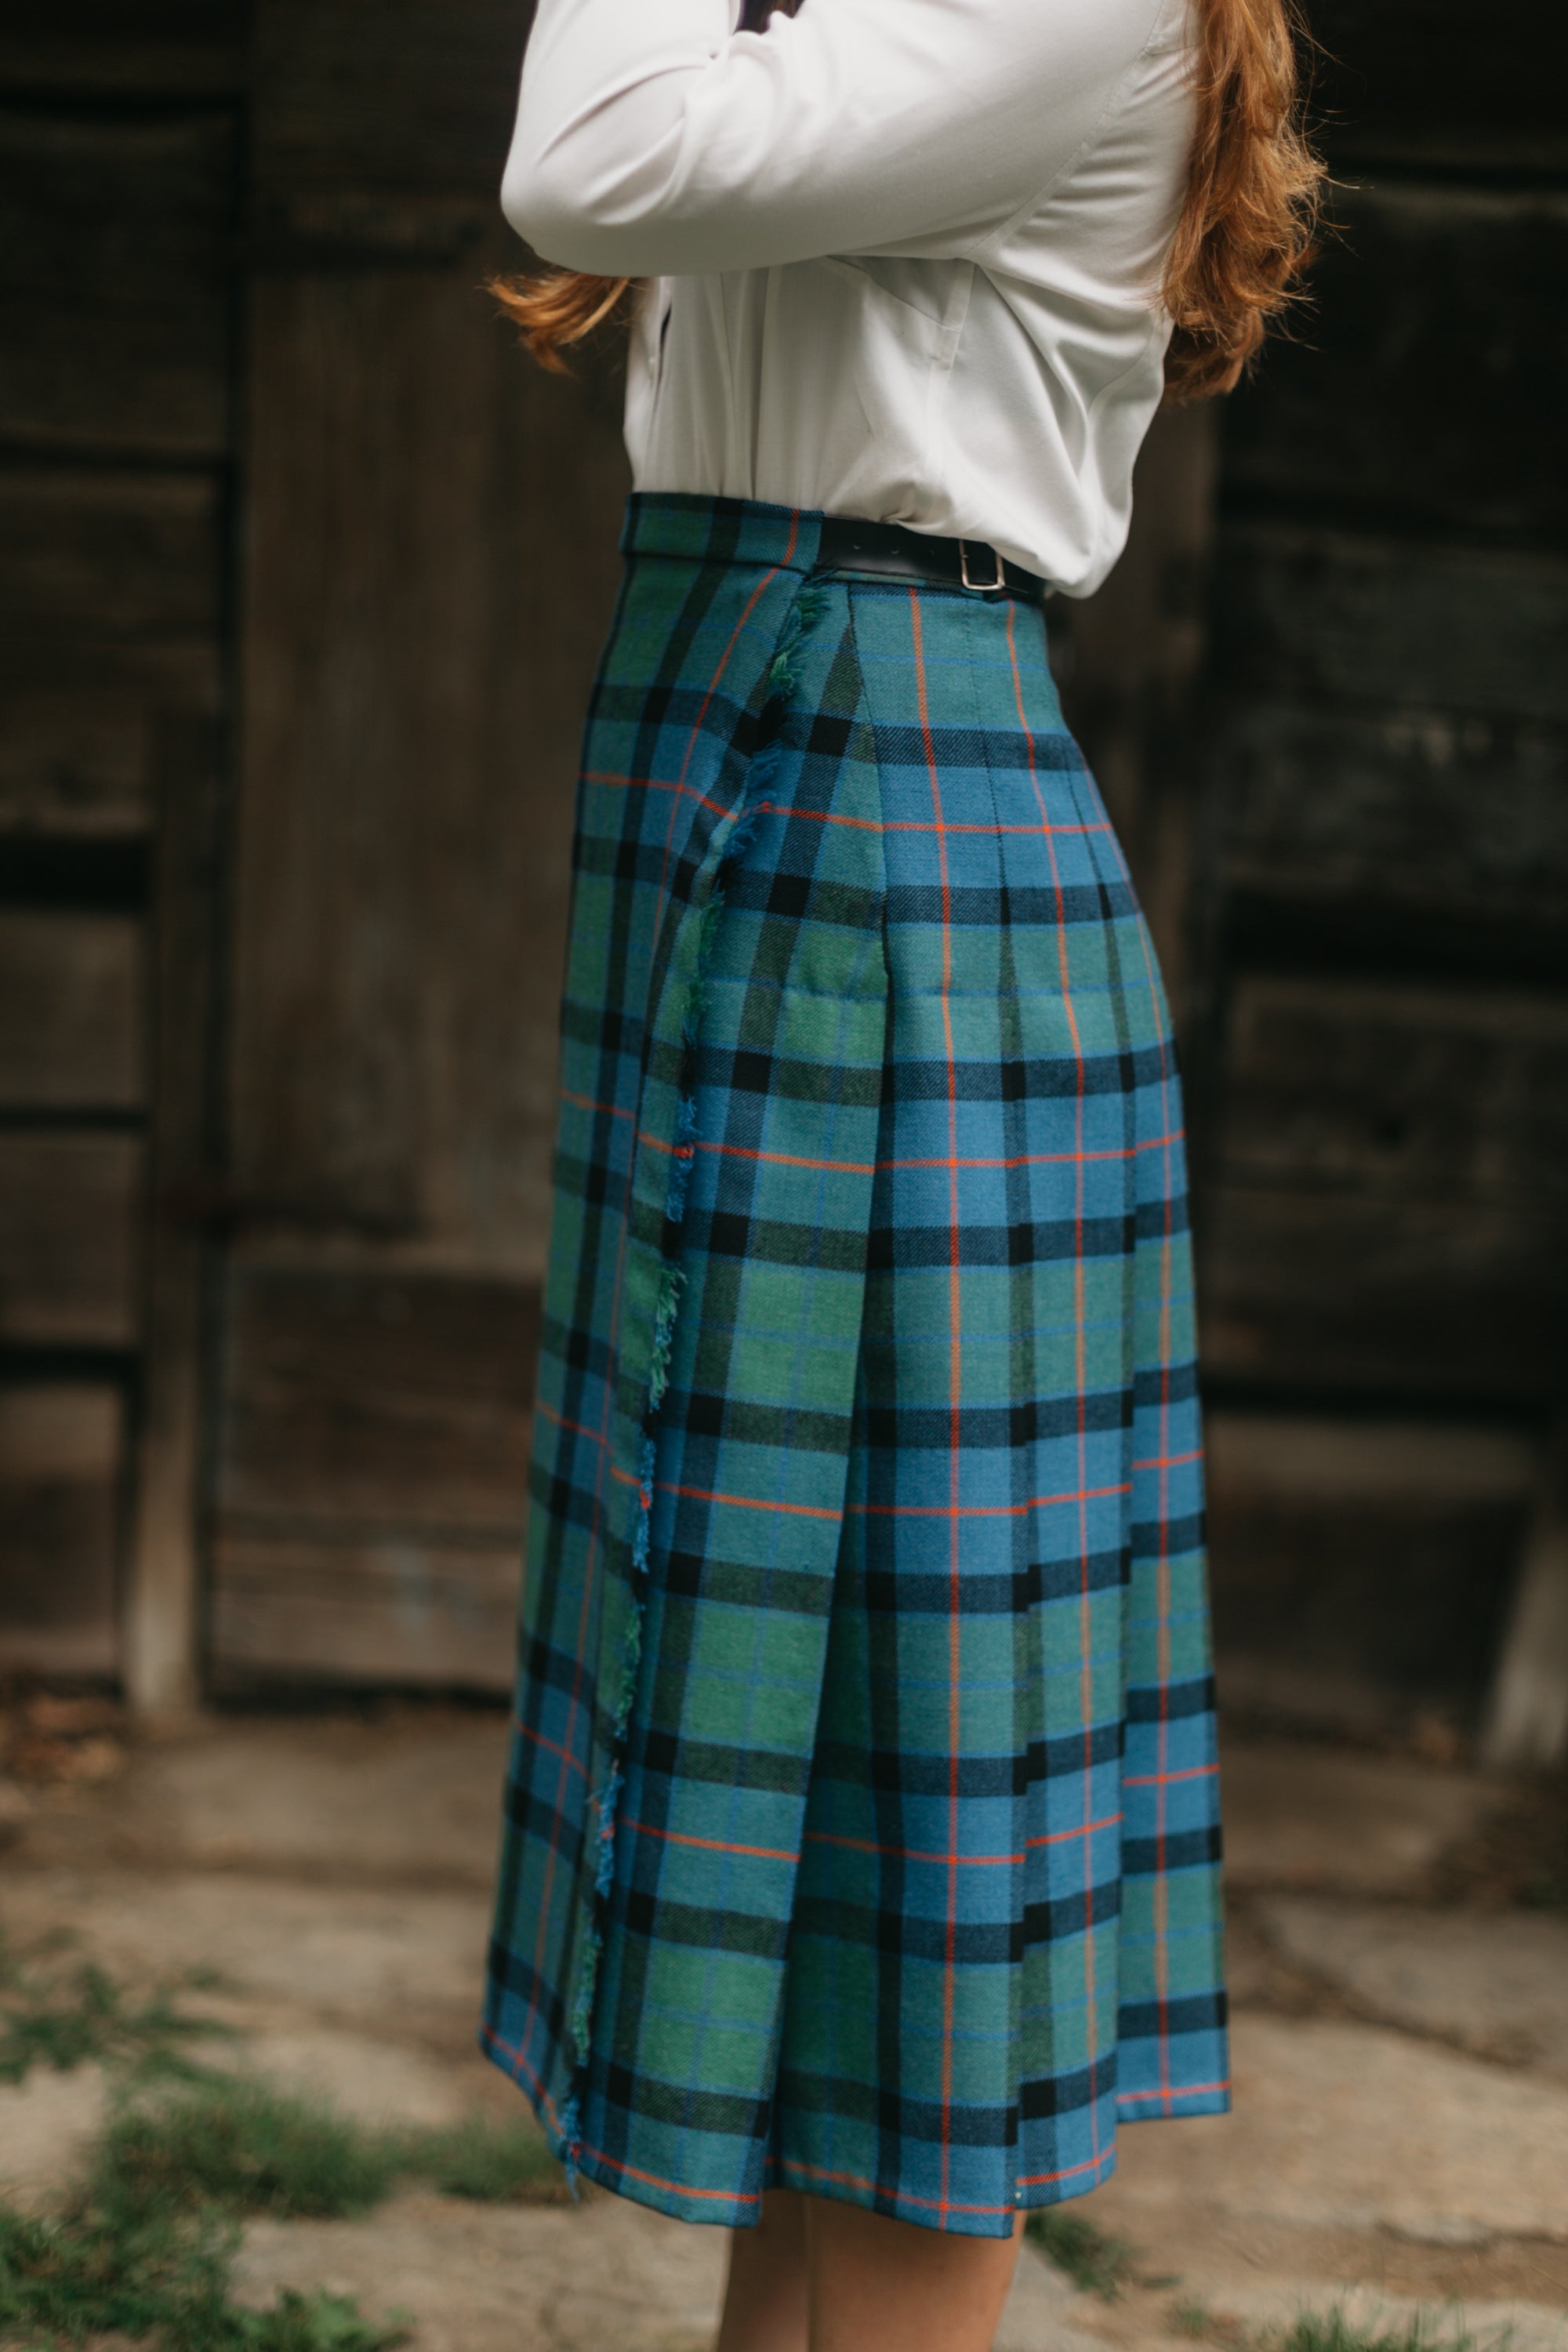 Close up photo of side closure on kilt skirt.